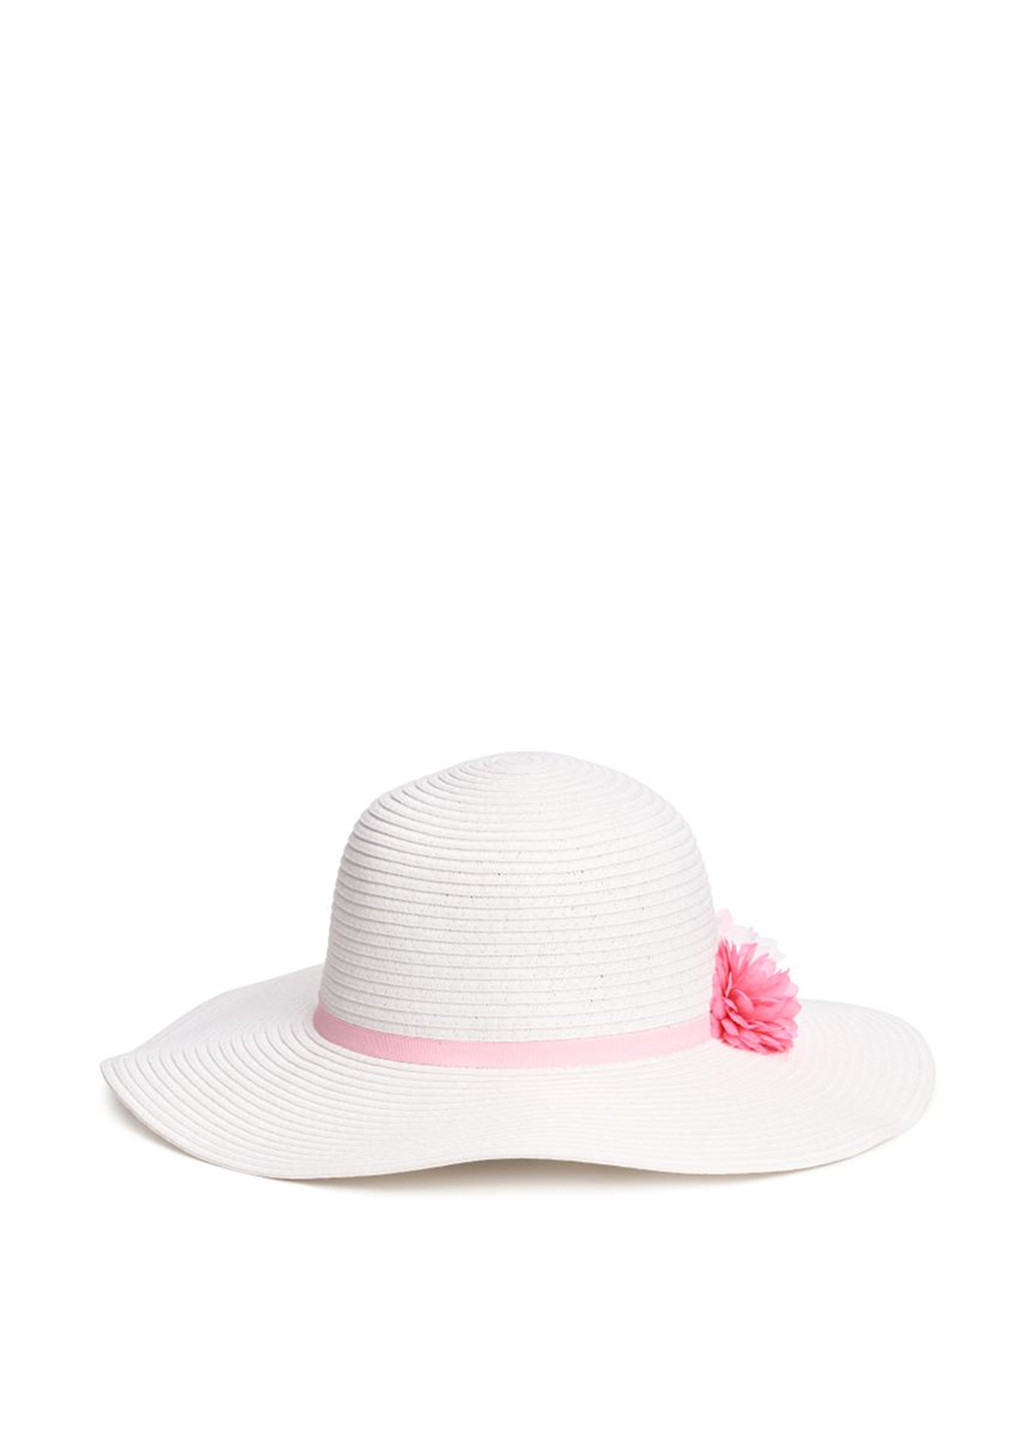 Шляпа H&M широкополая однотонная белая кэжуал солома